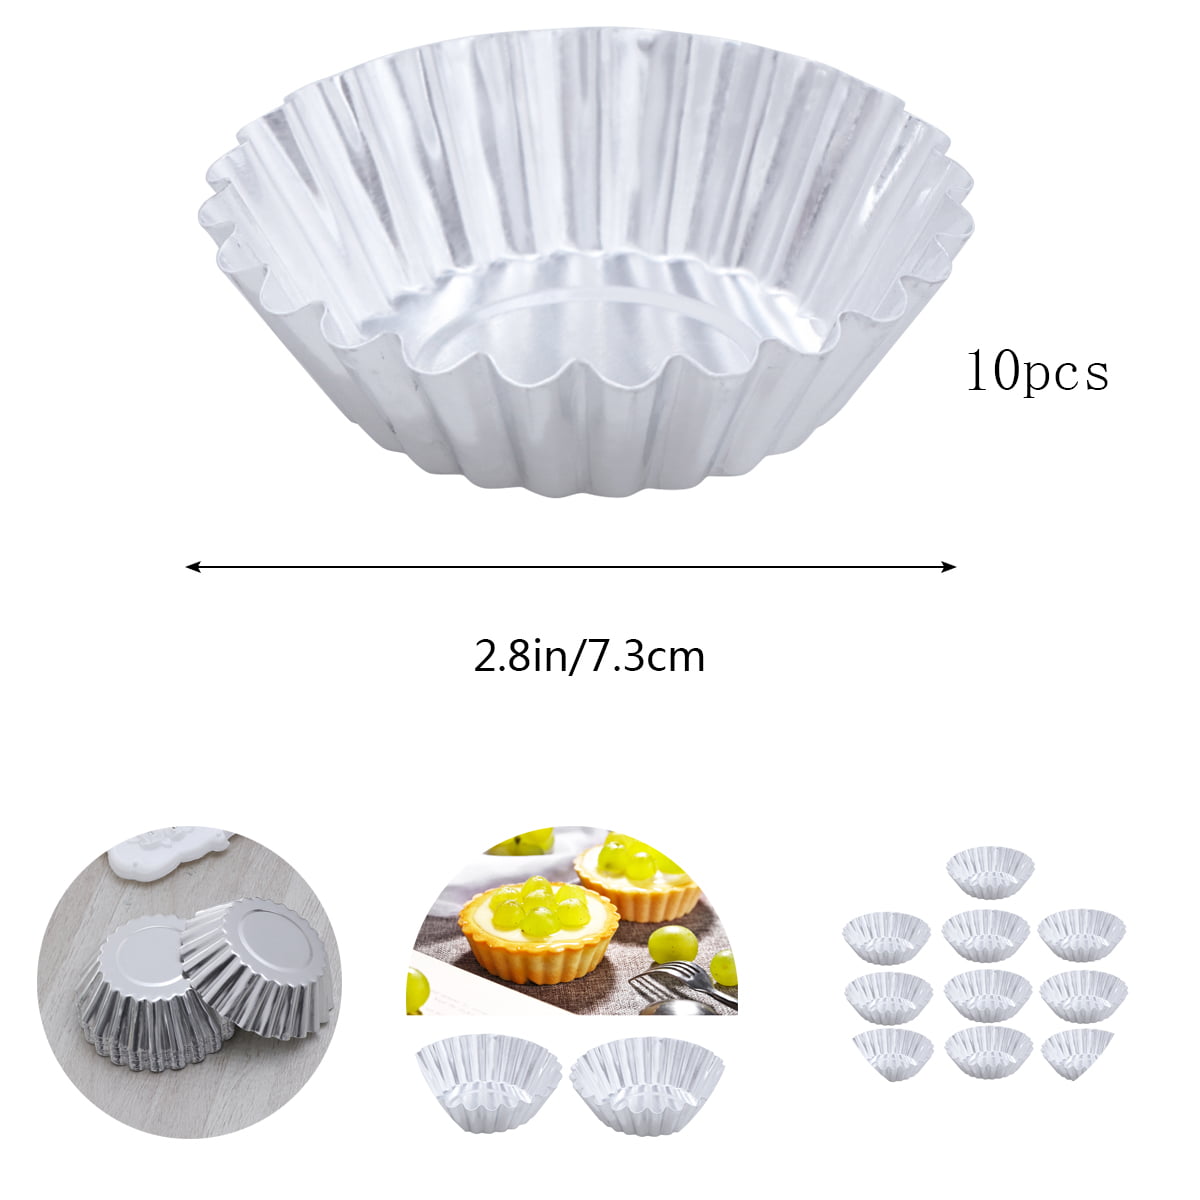 Details about   20pcs Aluminum Alloy Egg Tart Mold Flower Shape Cupcake Baking Cup Tartlets Pans 